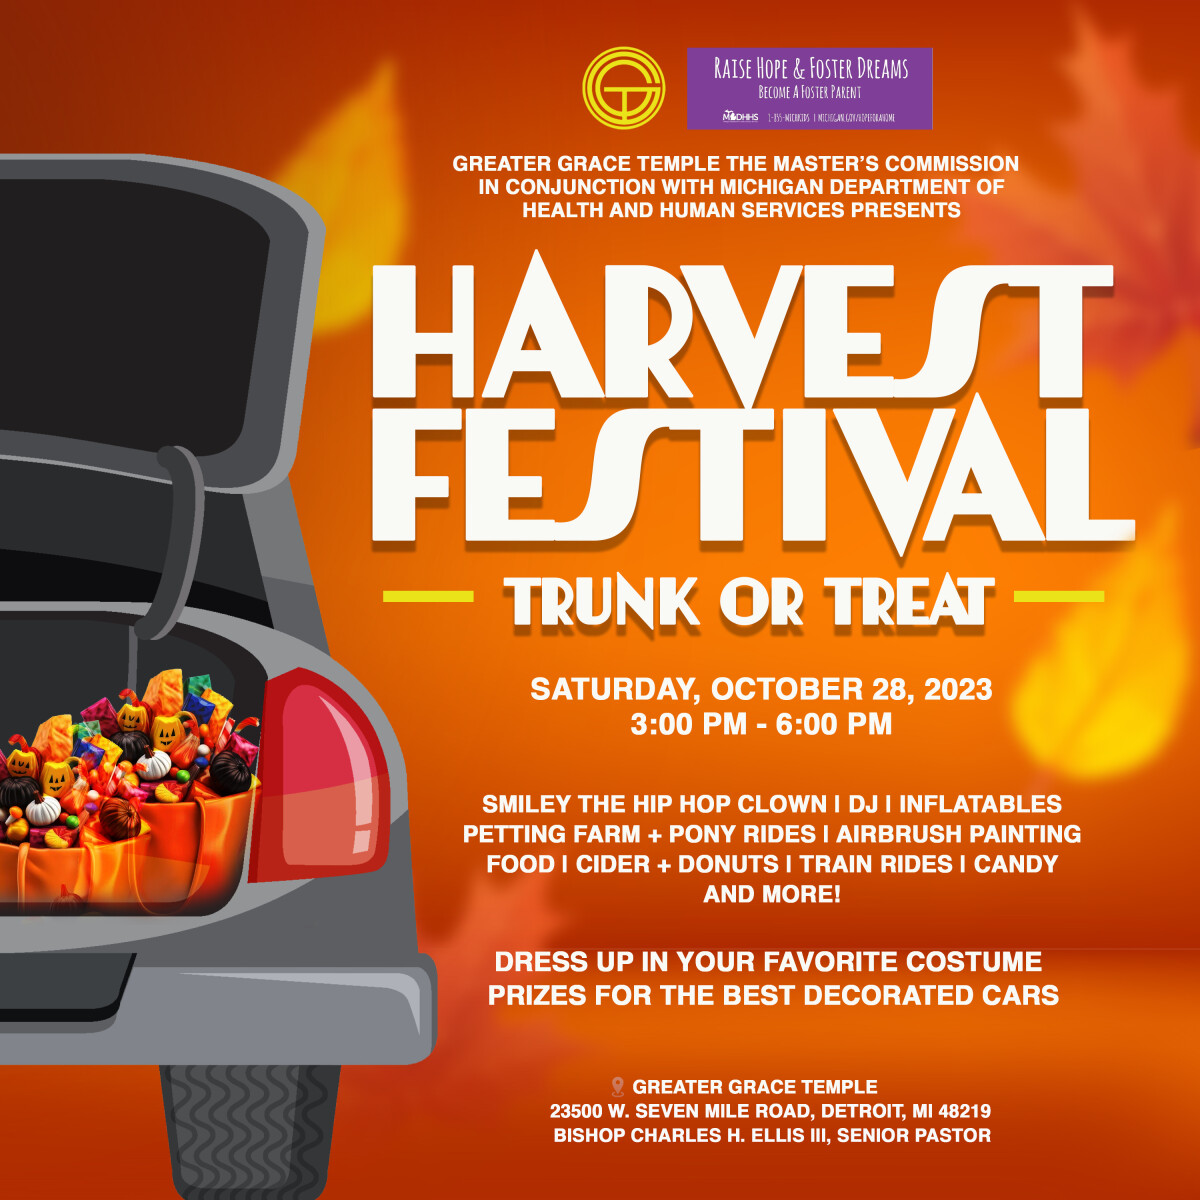 Harvest Festival Trunk or Treat